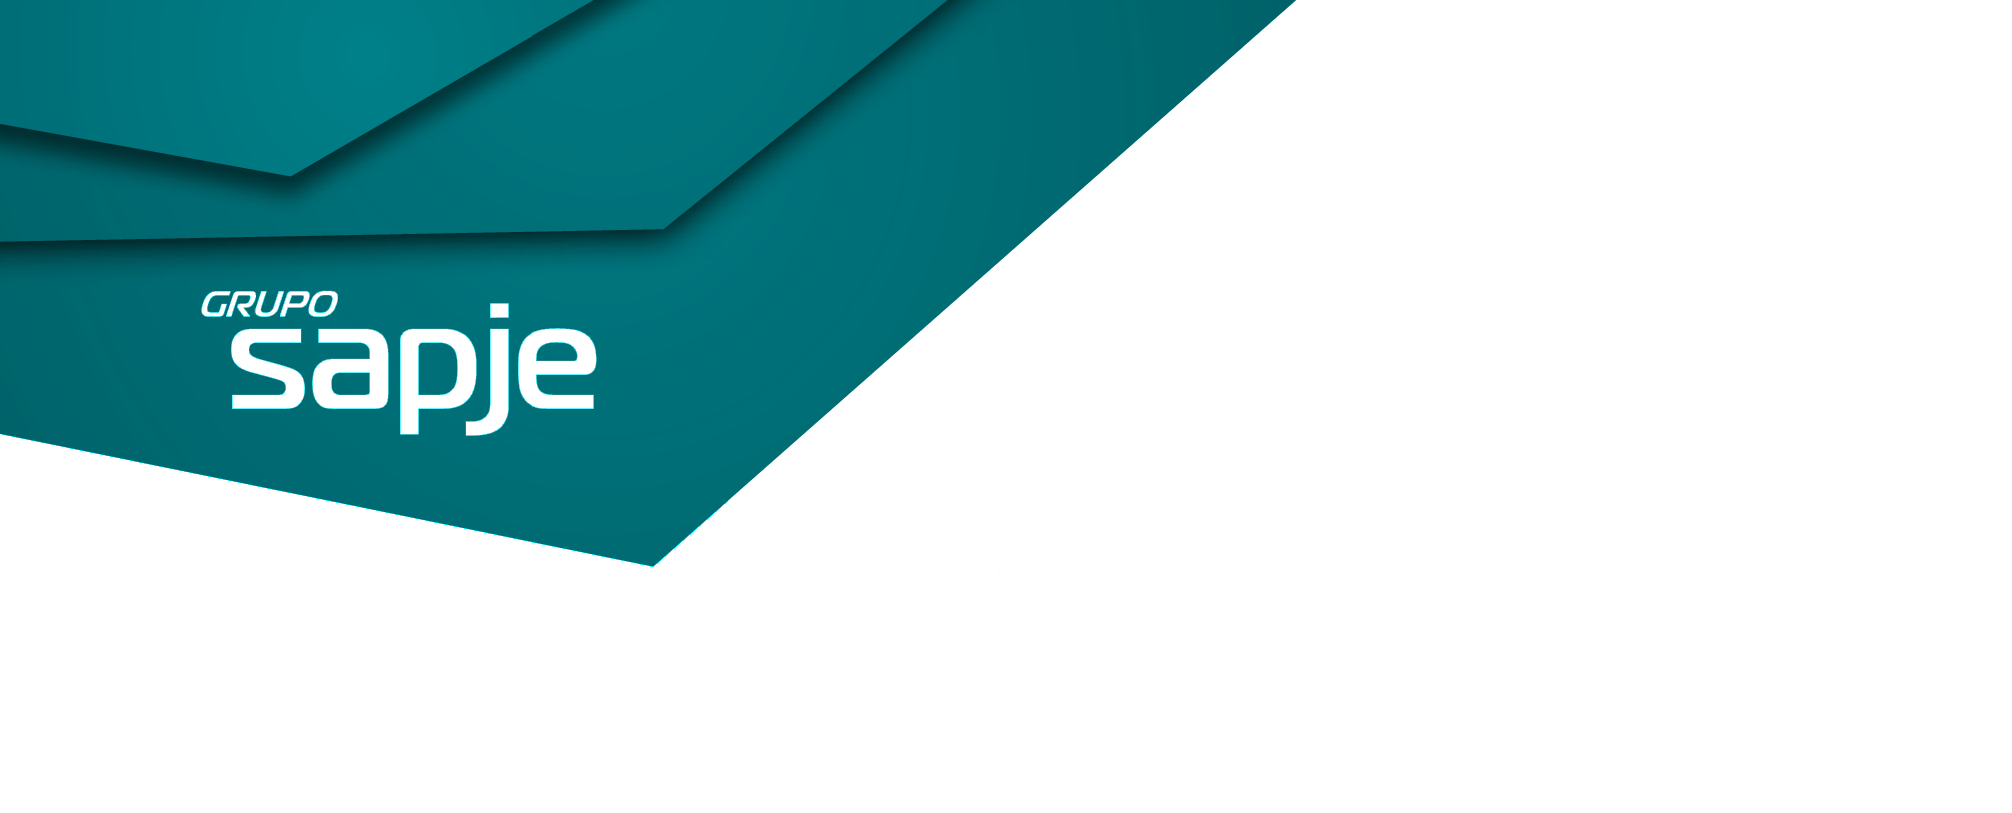 Cabecera con logo del grupo SAPJE verde teal